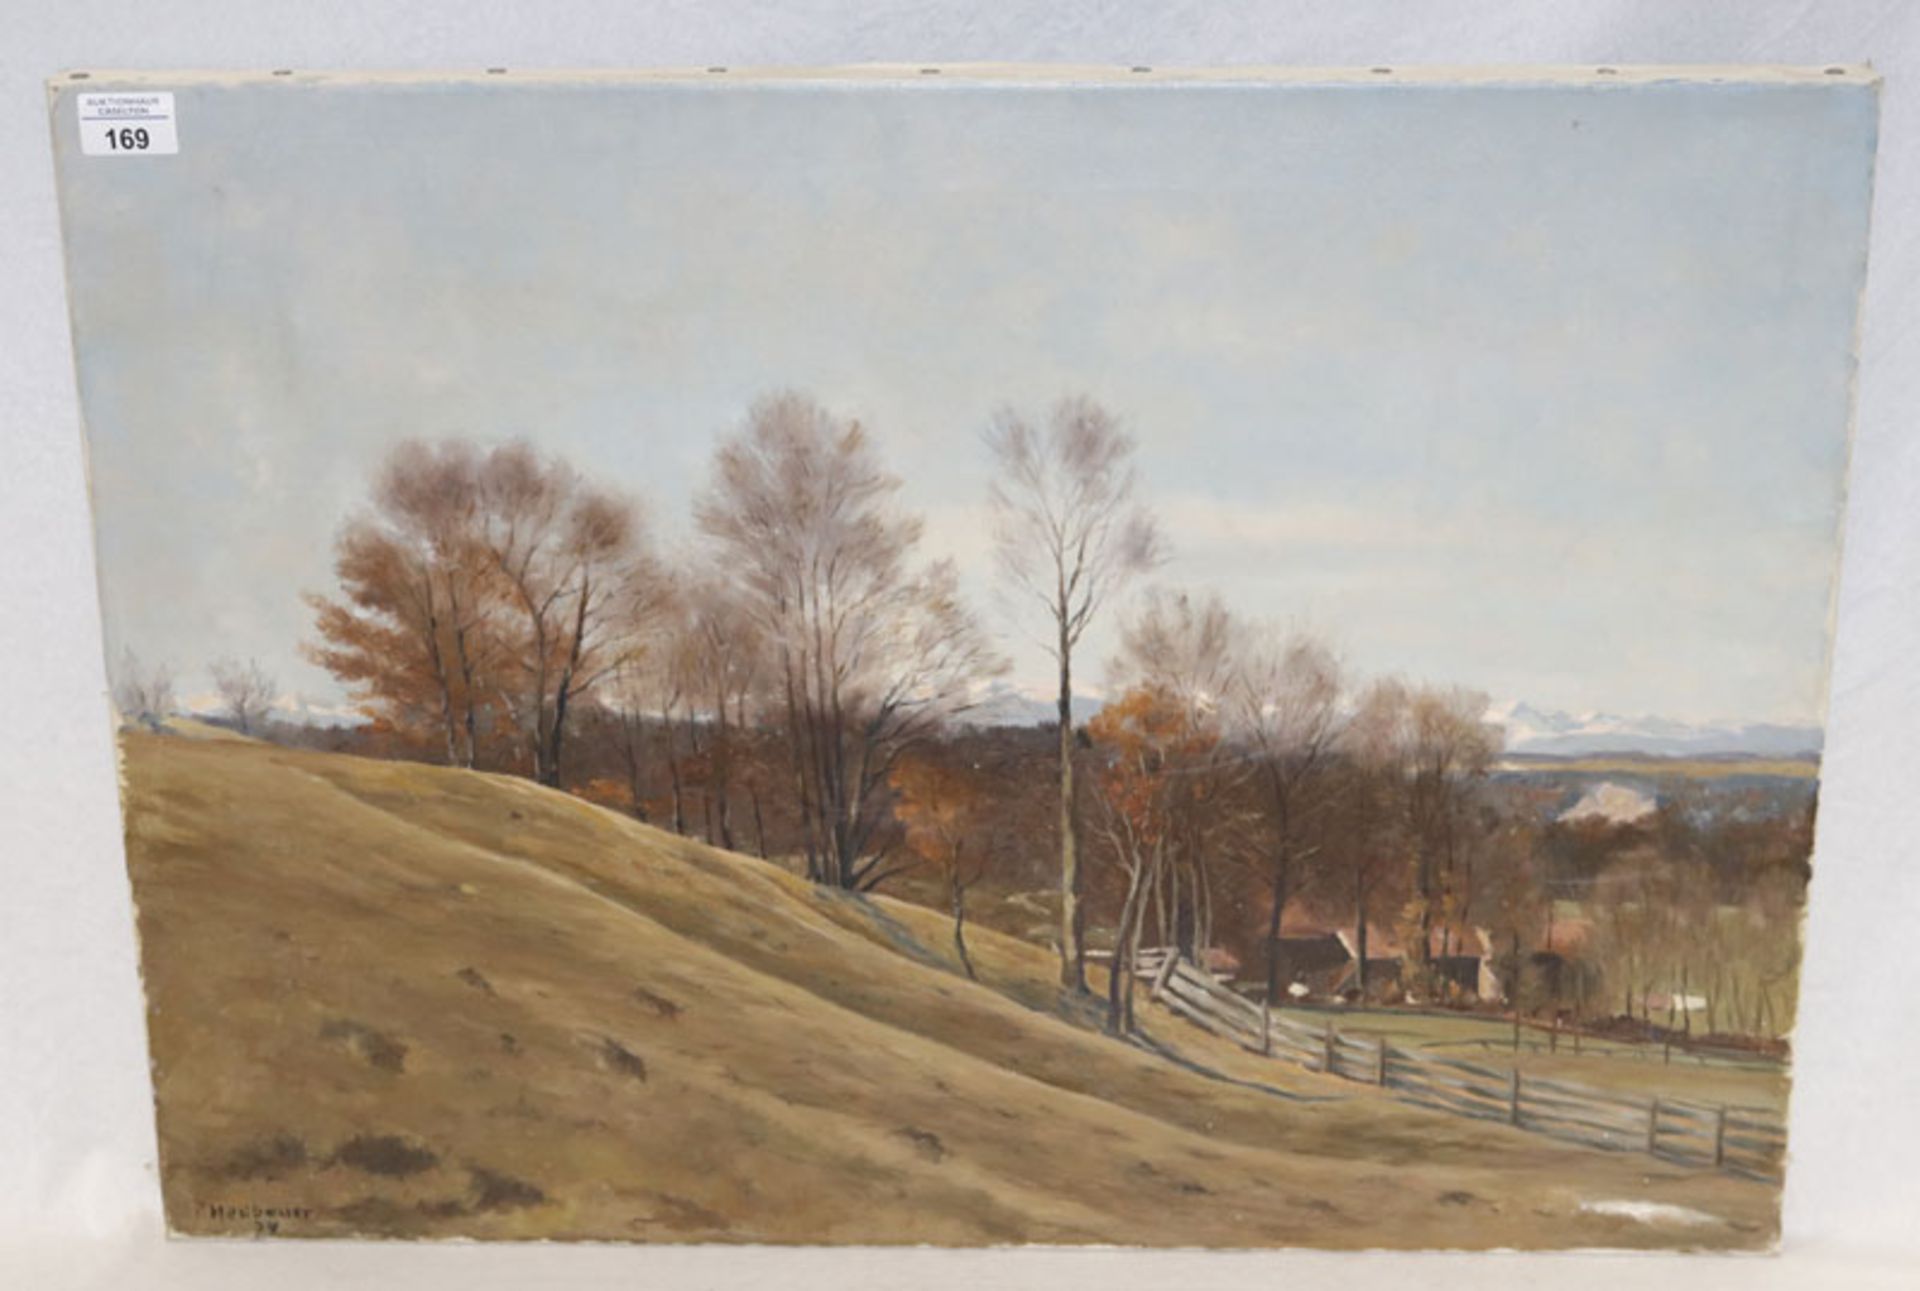 Gemälde ÖL/LW 'Alpenlandschaft im Herbst', signiert Haslbauer, Paul, datiert 79, * 1919 München +